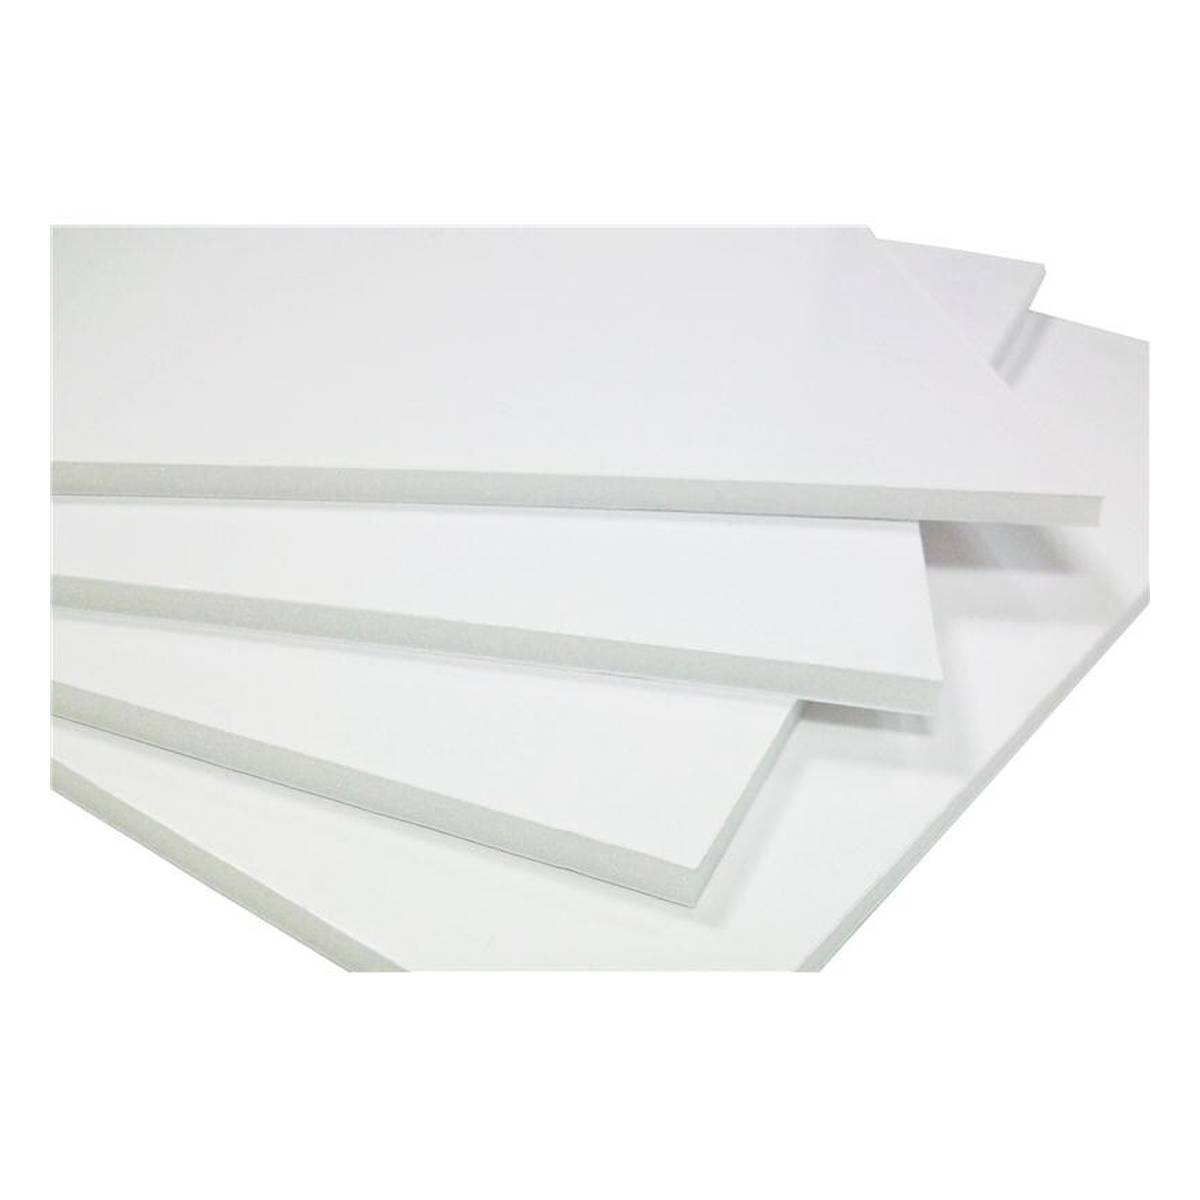 West Design White Foam Board A2 Single Pack